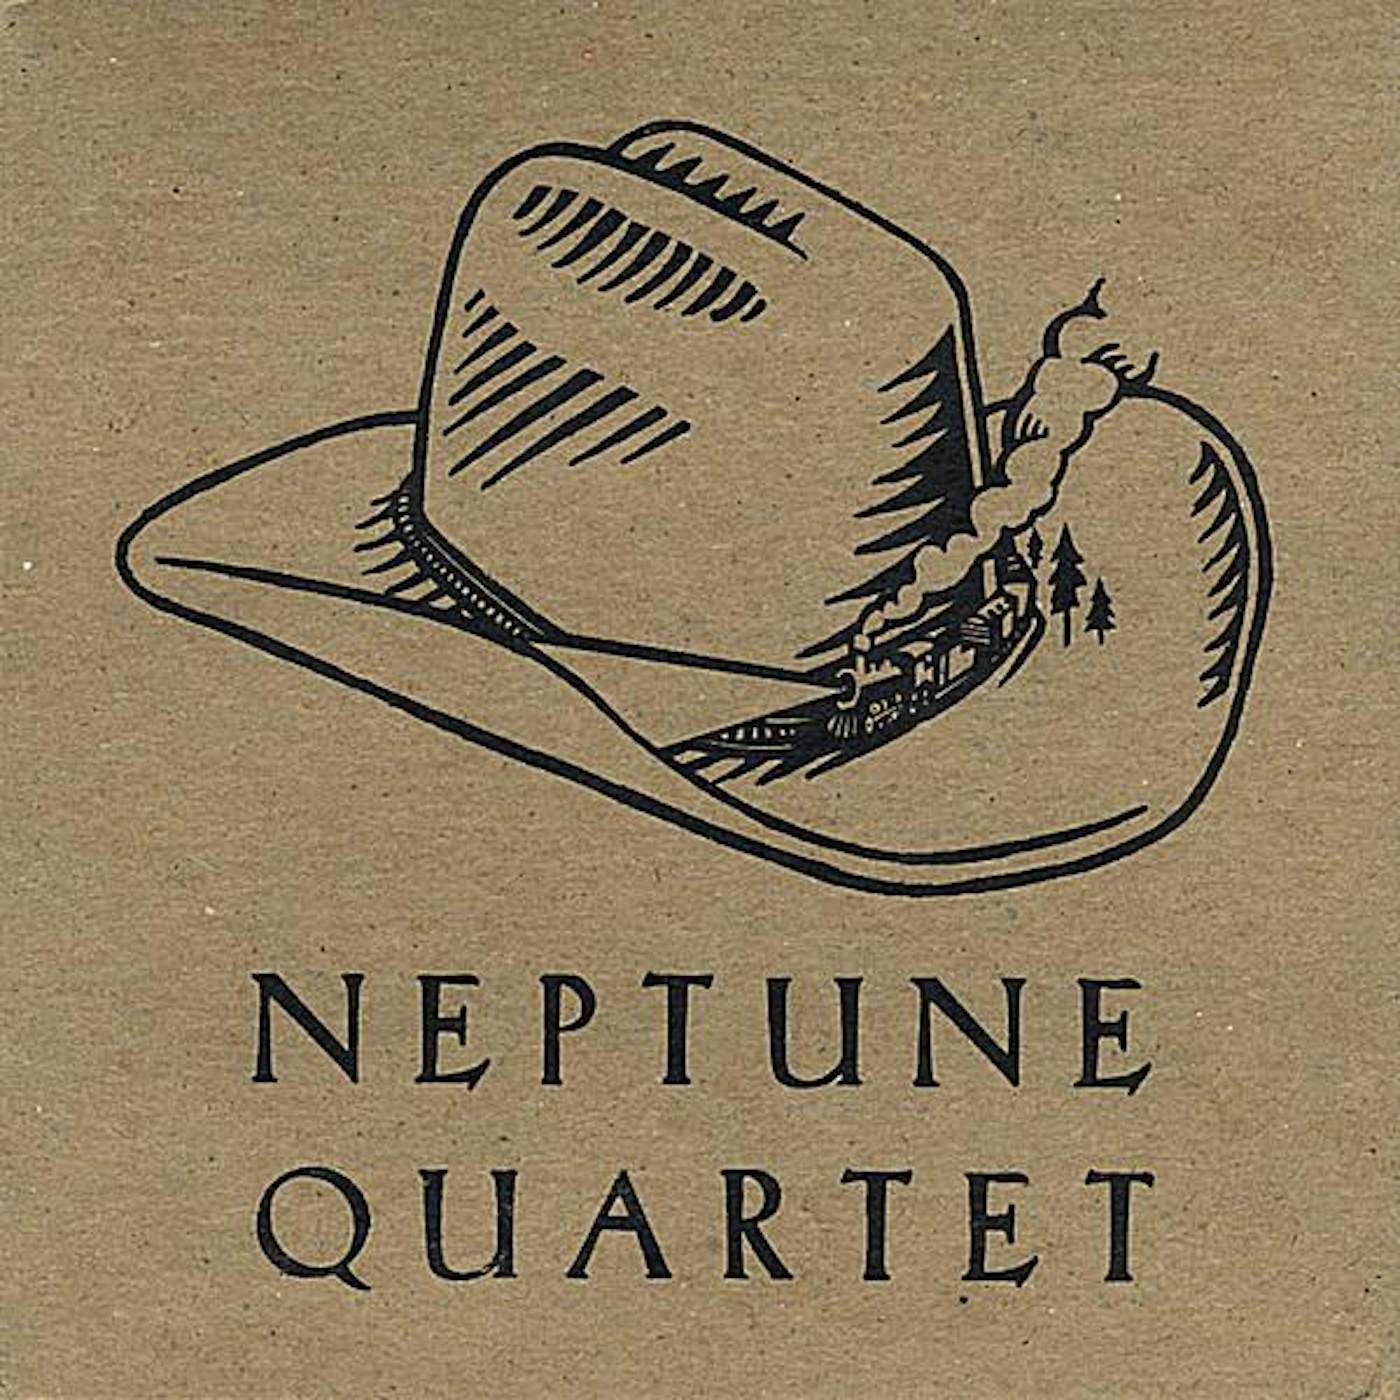 The Neptune Quartet CD